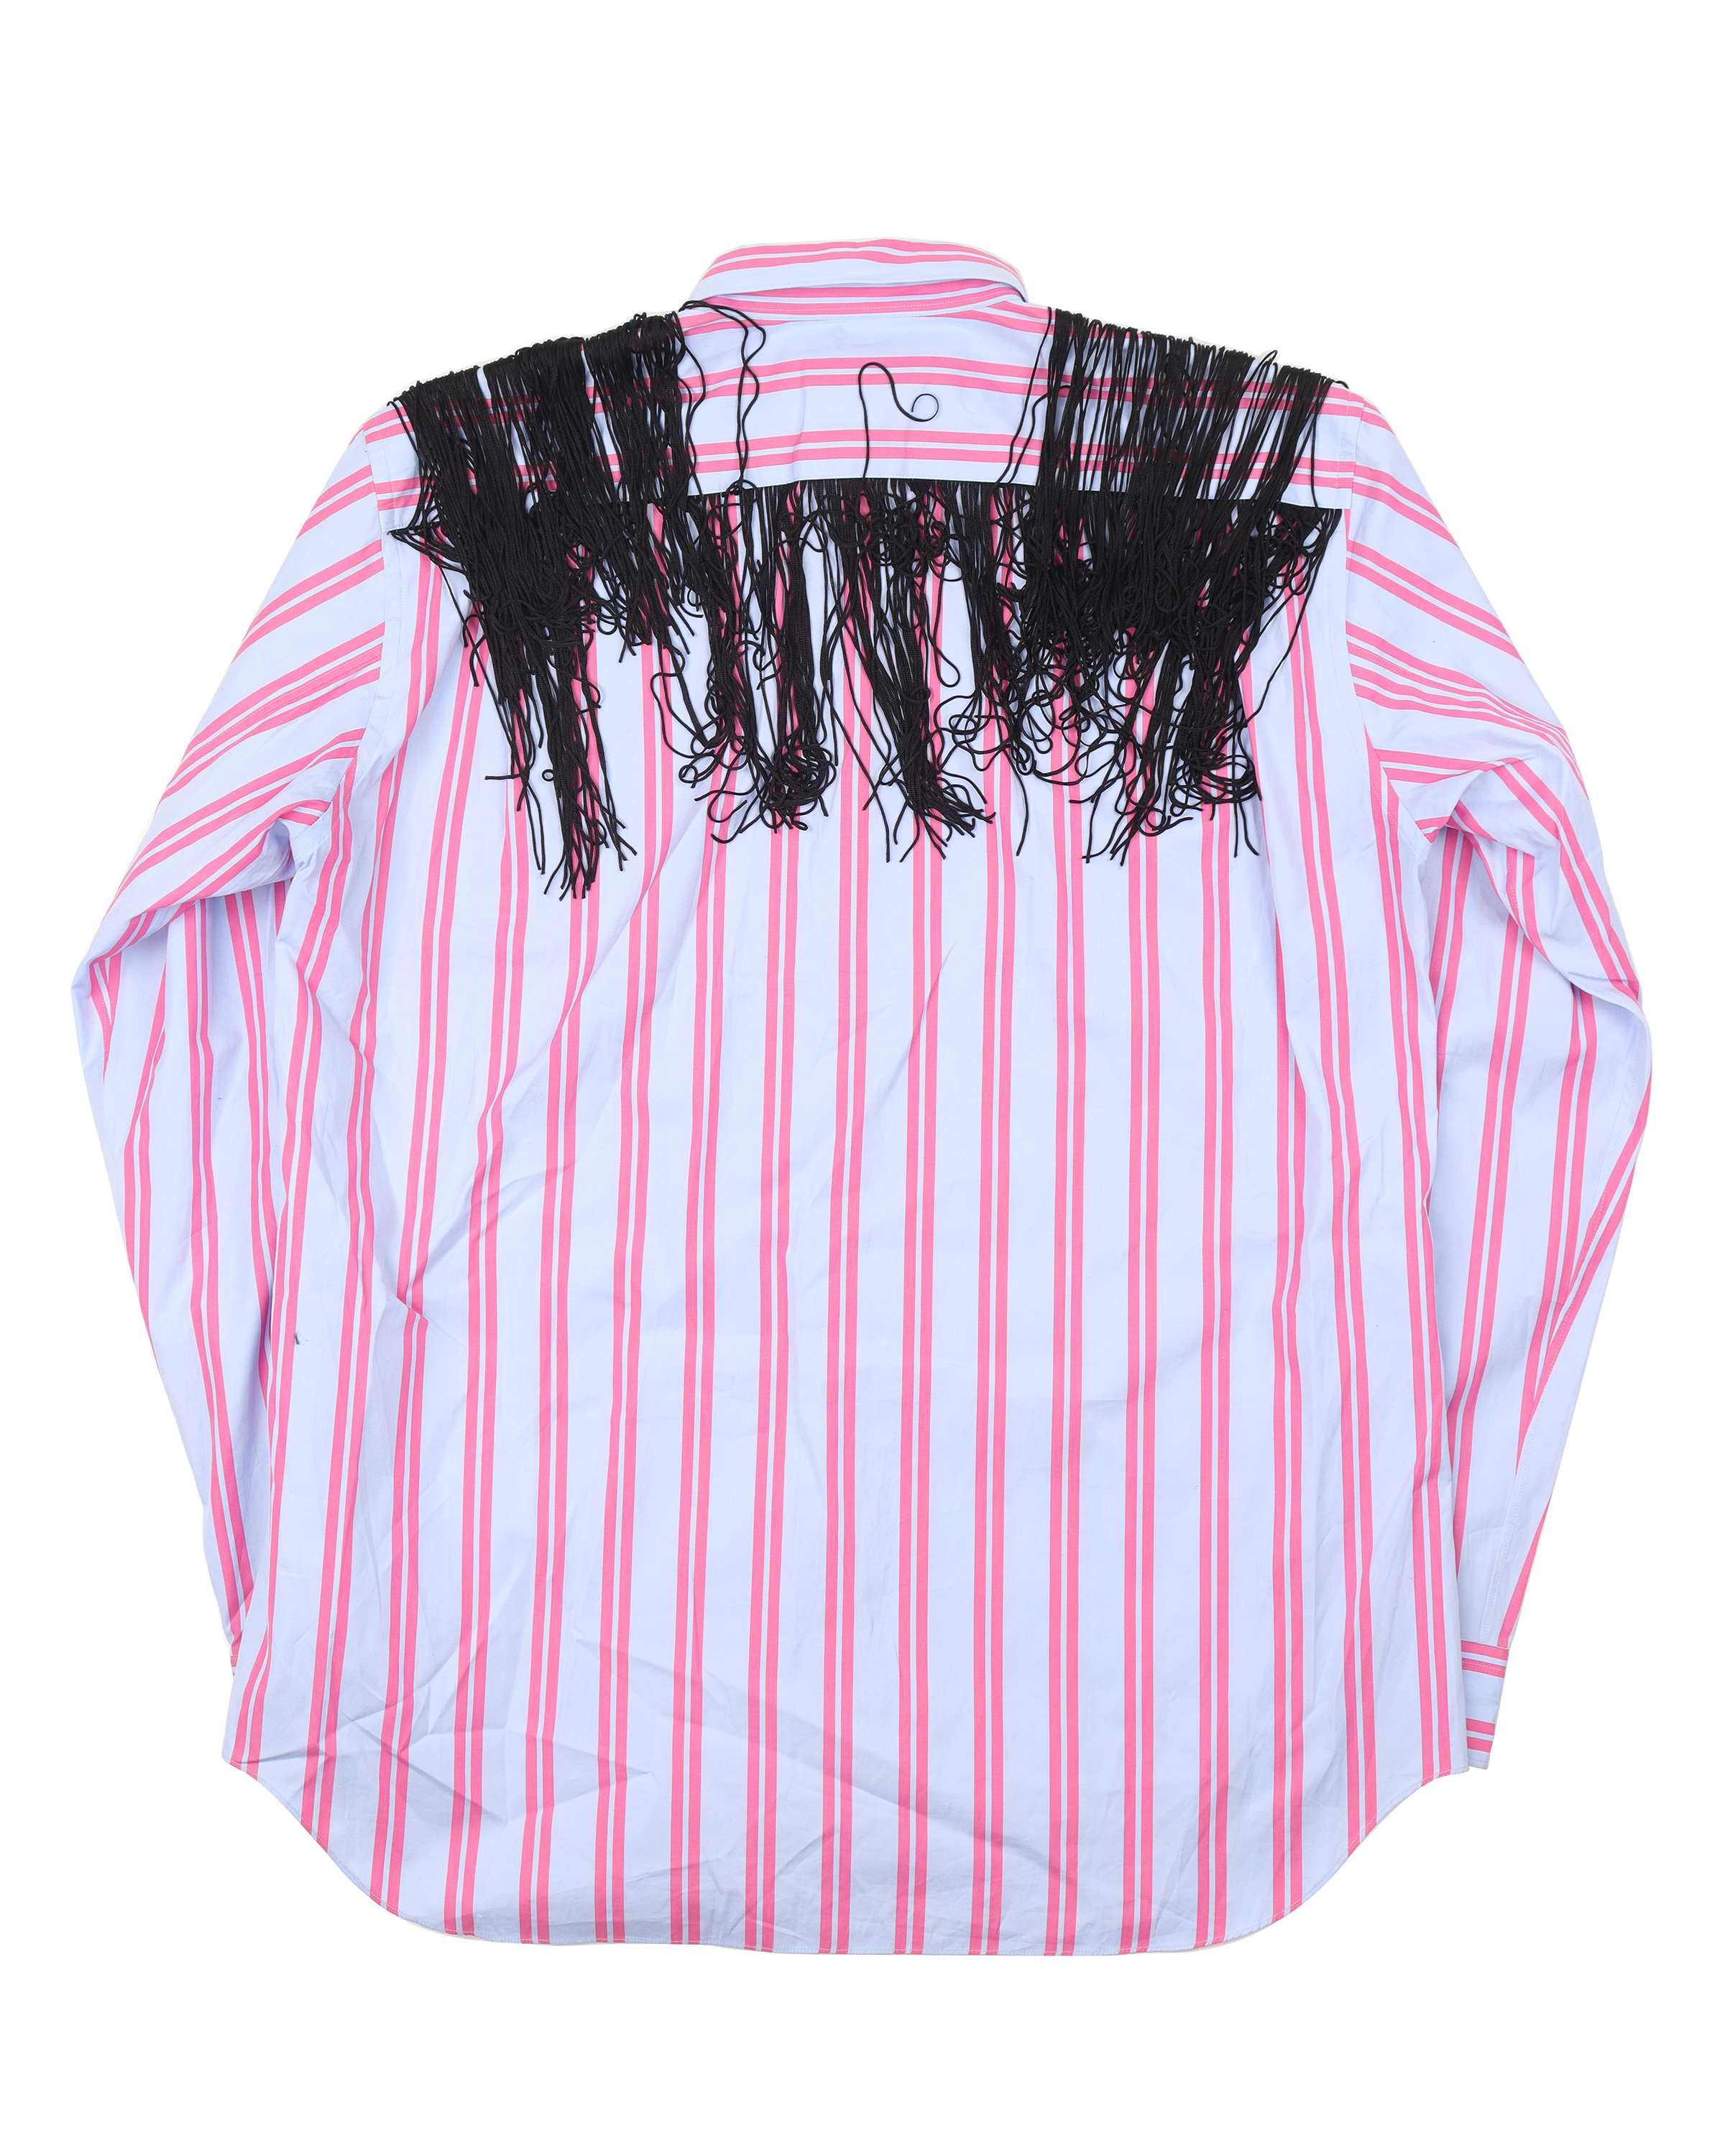 Striped Button Shirt w/ Tags